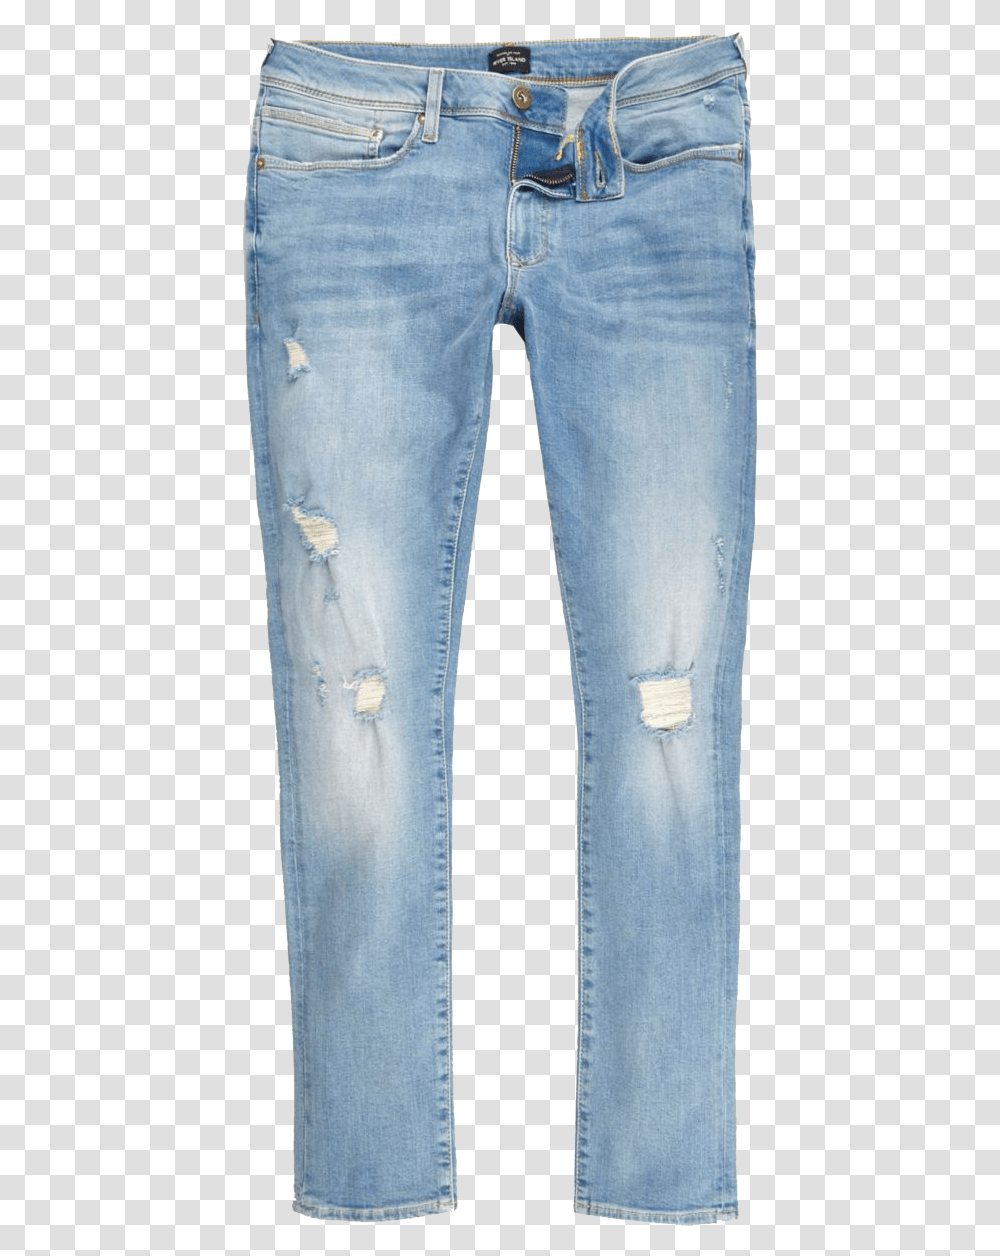 Jeans For Men Pics Light Ripped Blue Jeans, Pants, Apparel, Denim Transparent Png